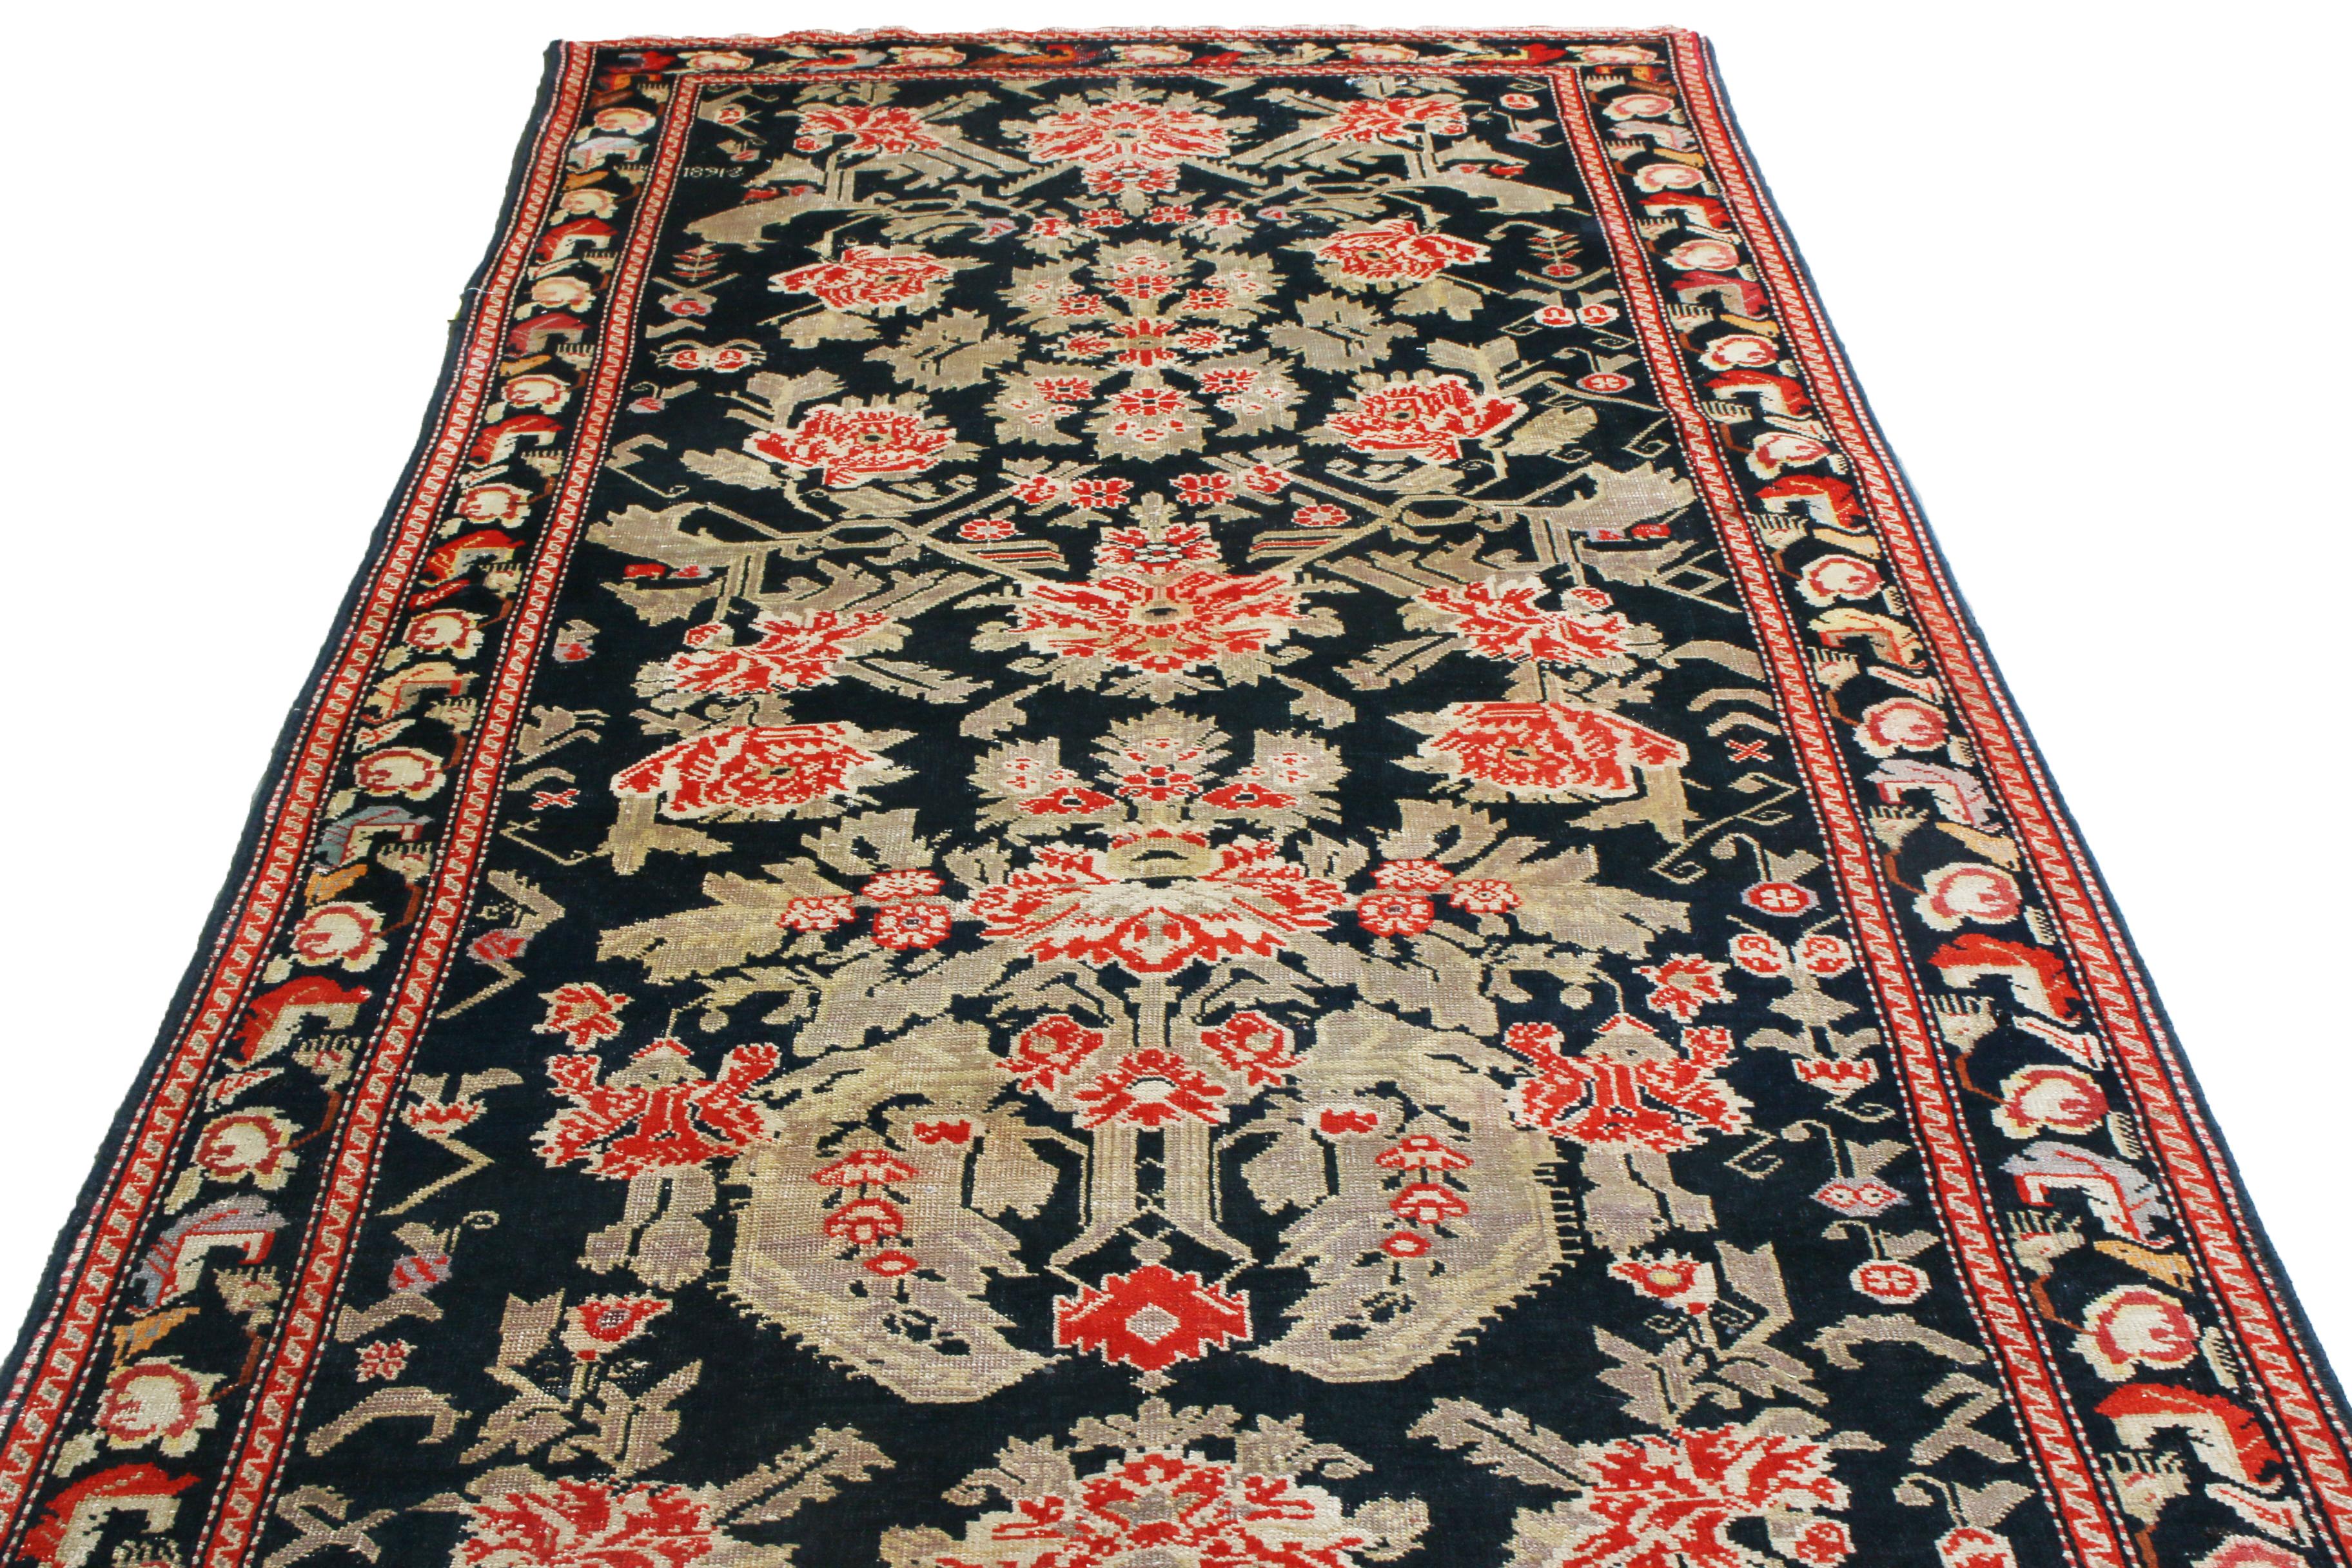 Other Antique Karabagh Black and Red Wool Floral Runner Floral Pattern by Rug & Kilim For Sale